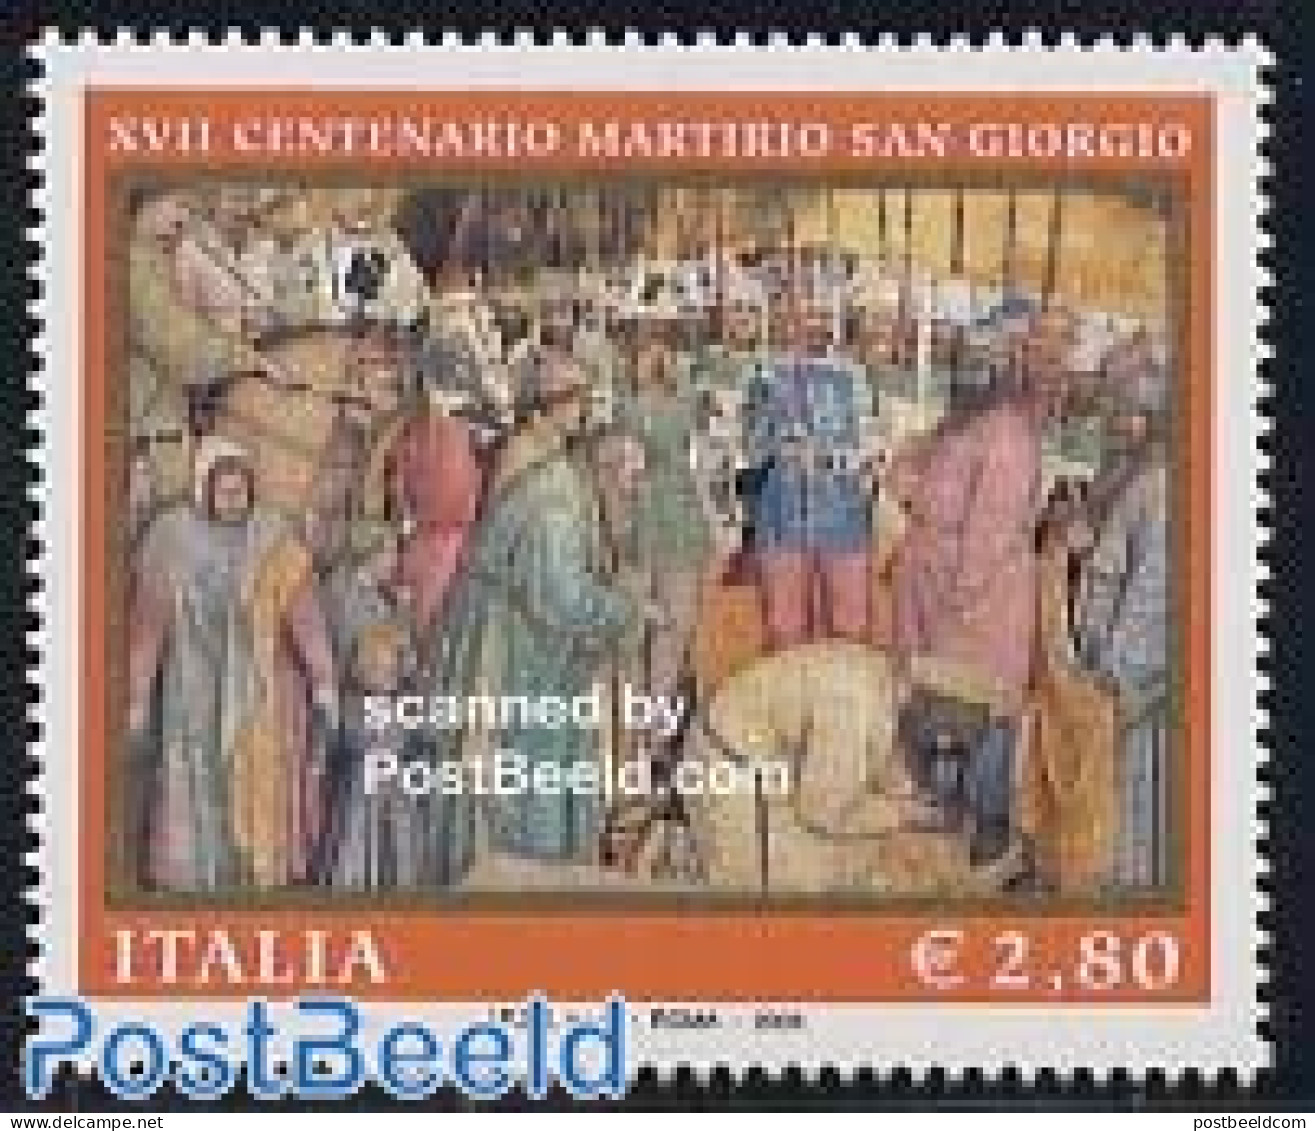 Italy 2004 San Giorgino 1v, Mint NH, History - Nature - Religion - Knights - Horses - Religion - Other & Unclassified